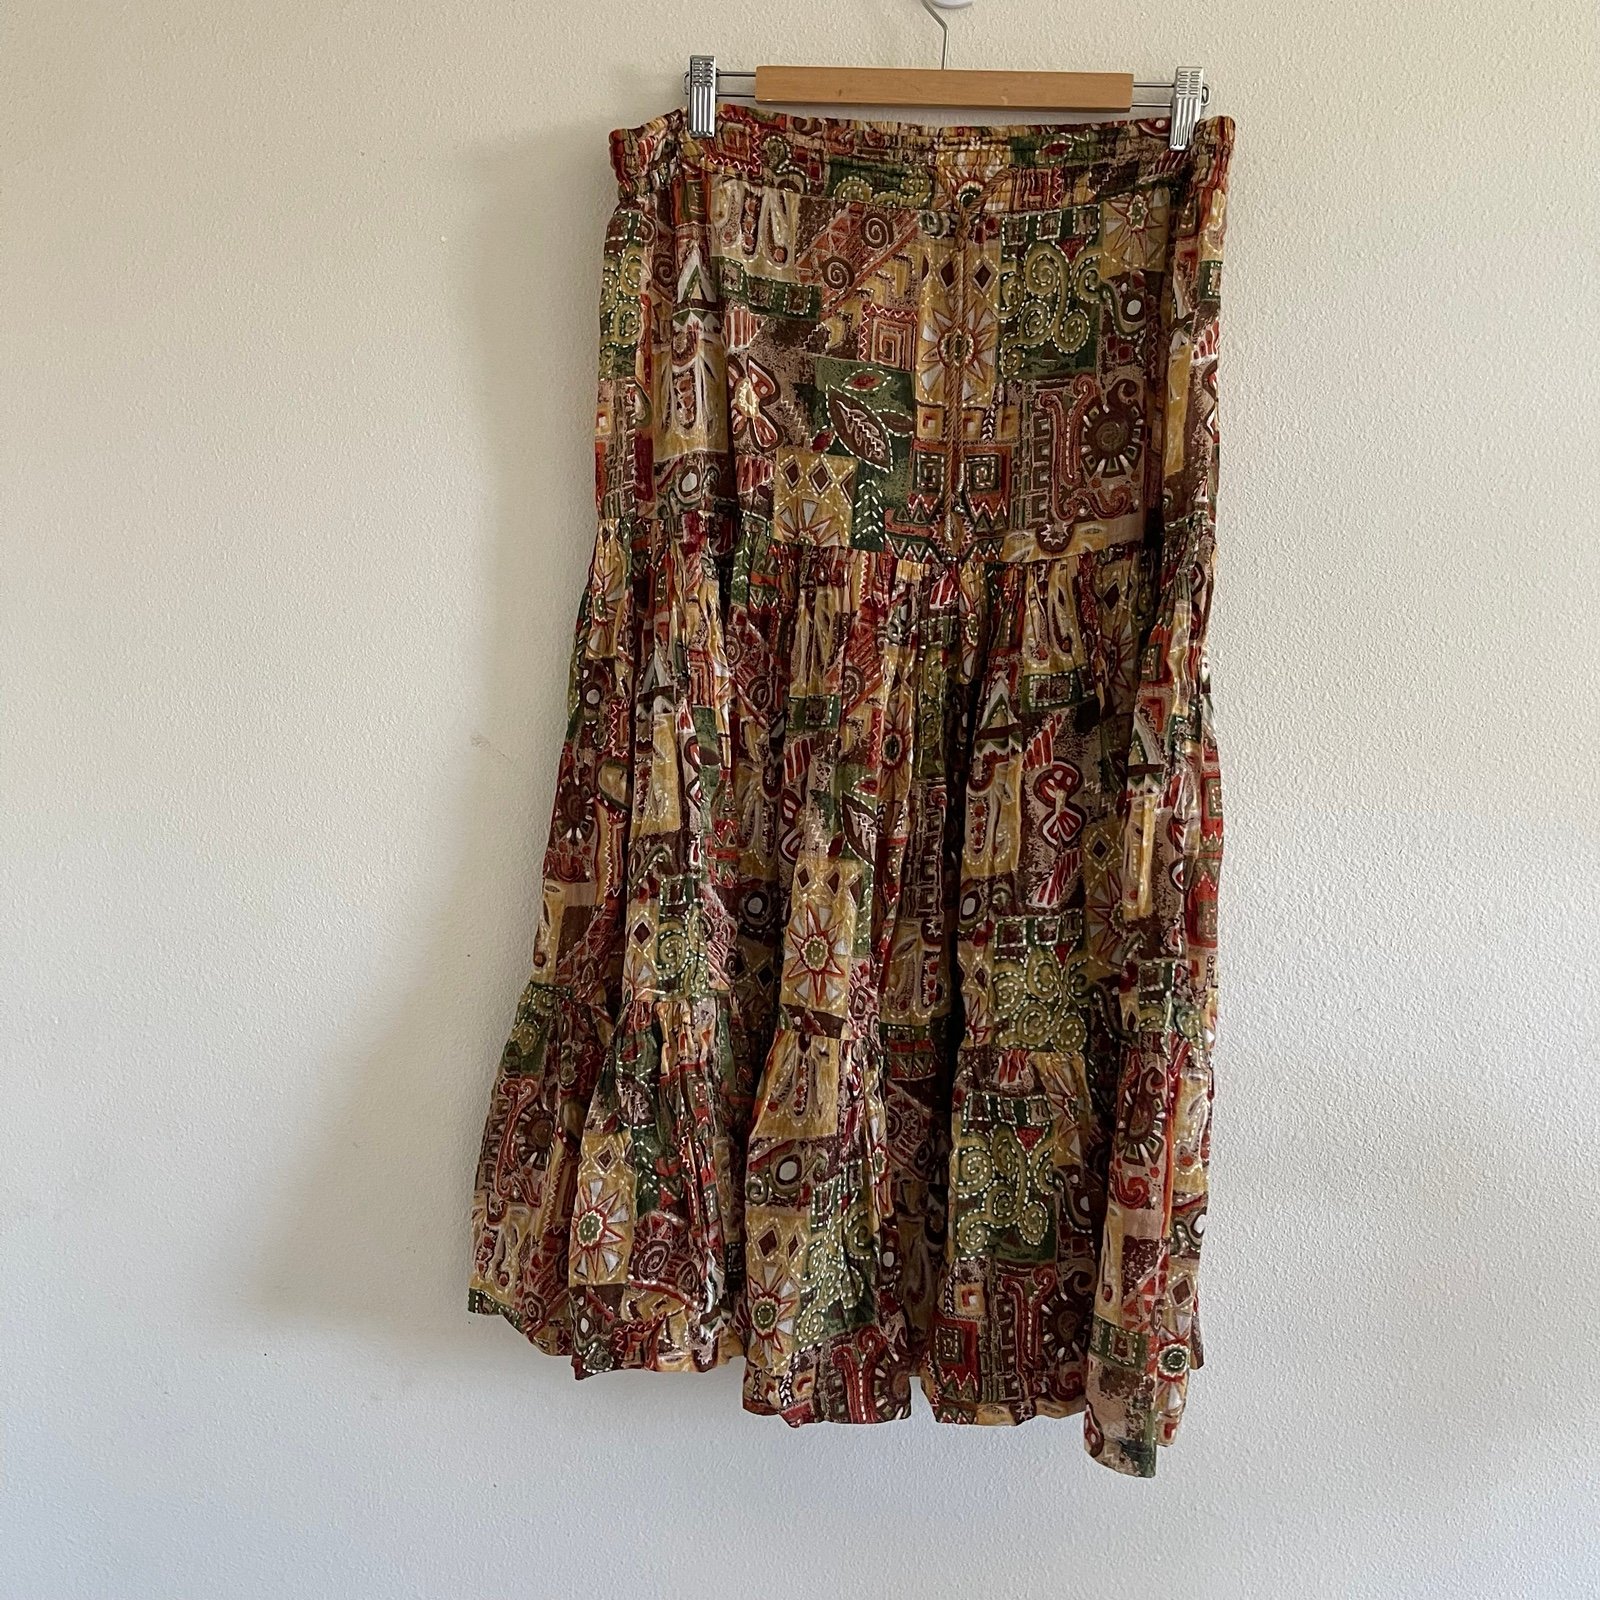 Factory Direct  Indira vintage maxi skirt size large orange patch work Lg7lIeWdG Low Price